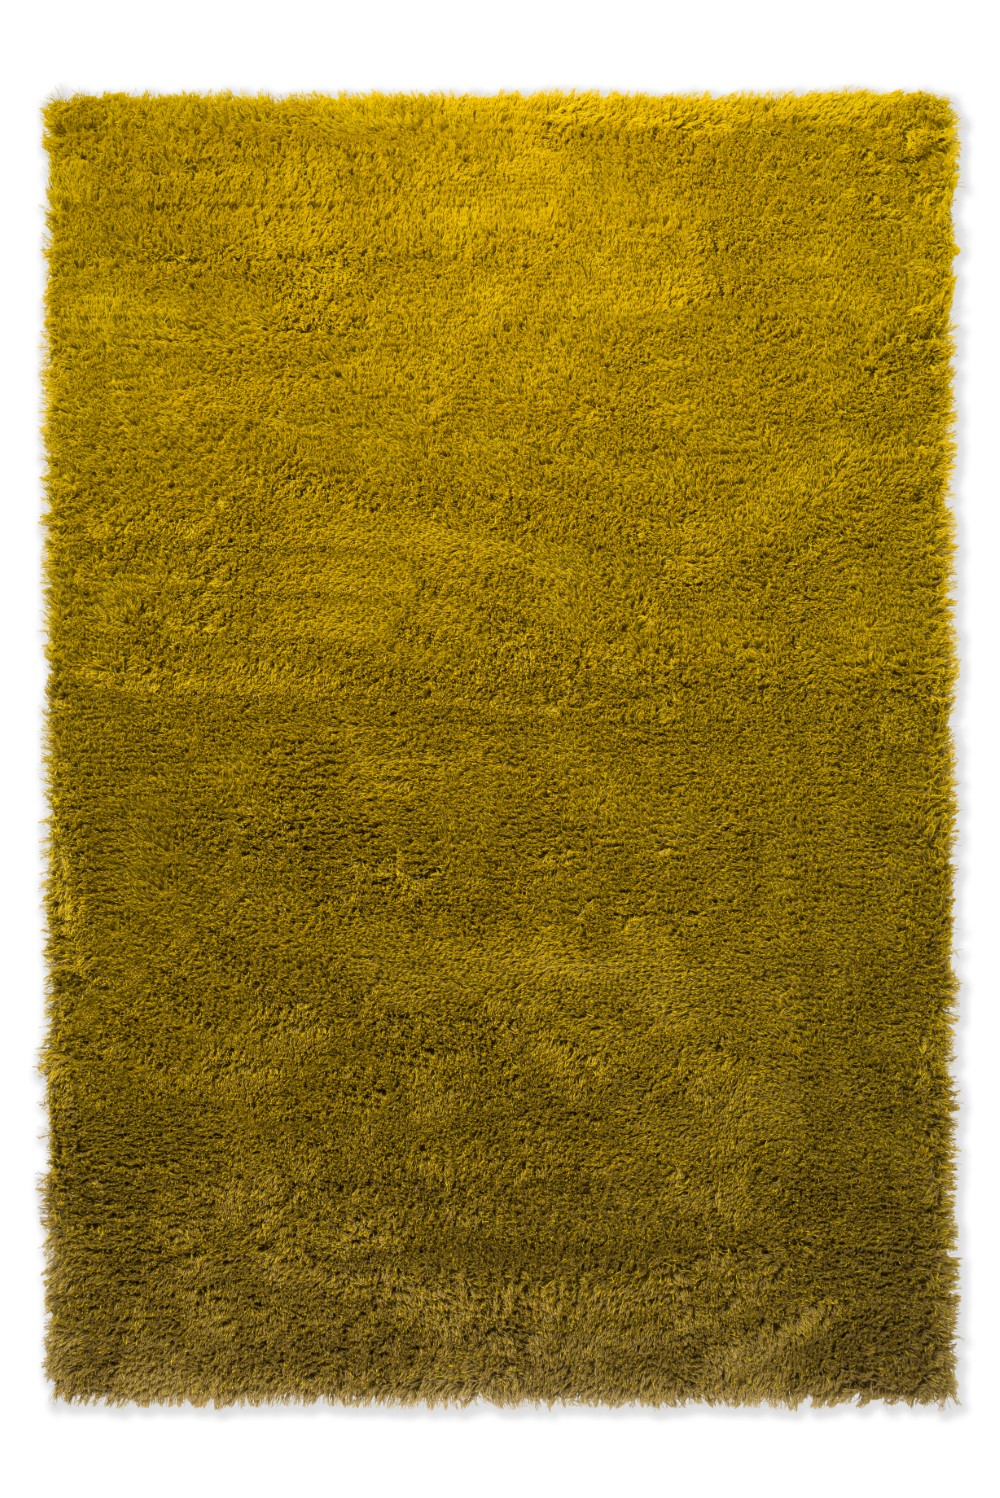 brink-campman-rug-shade-high-lemon-gold-011906